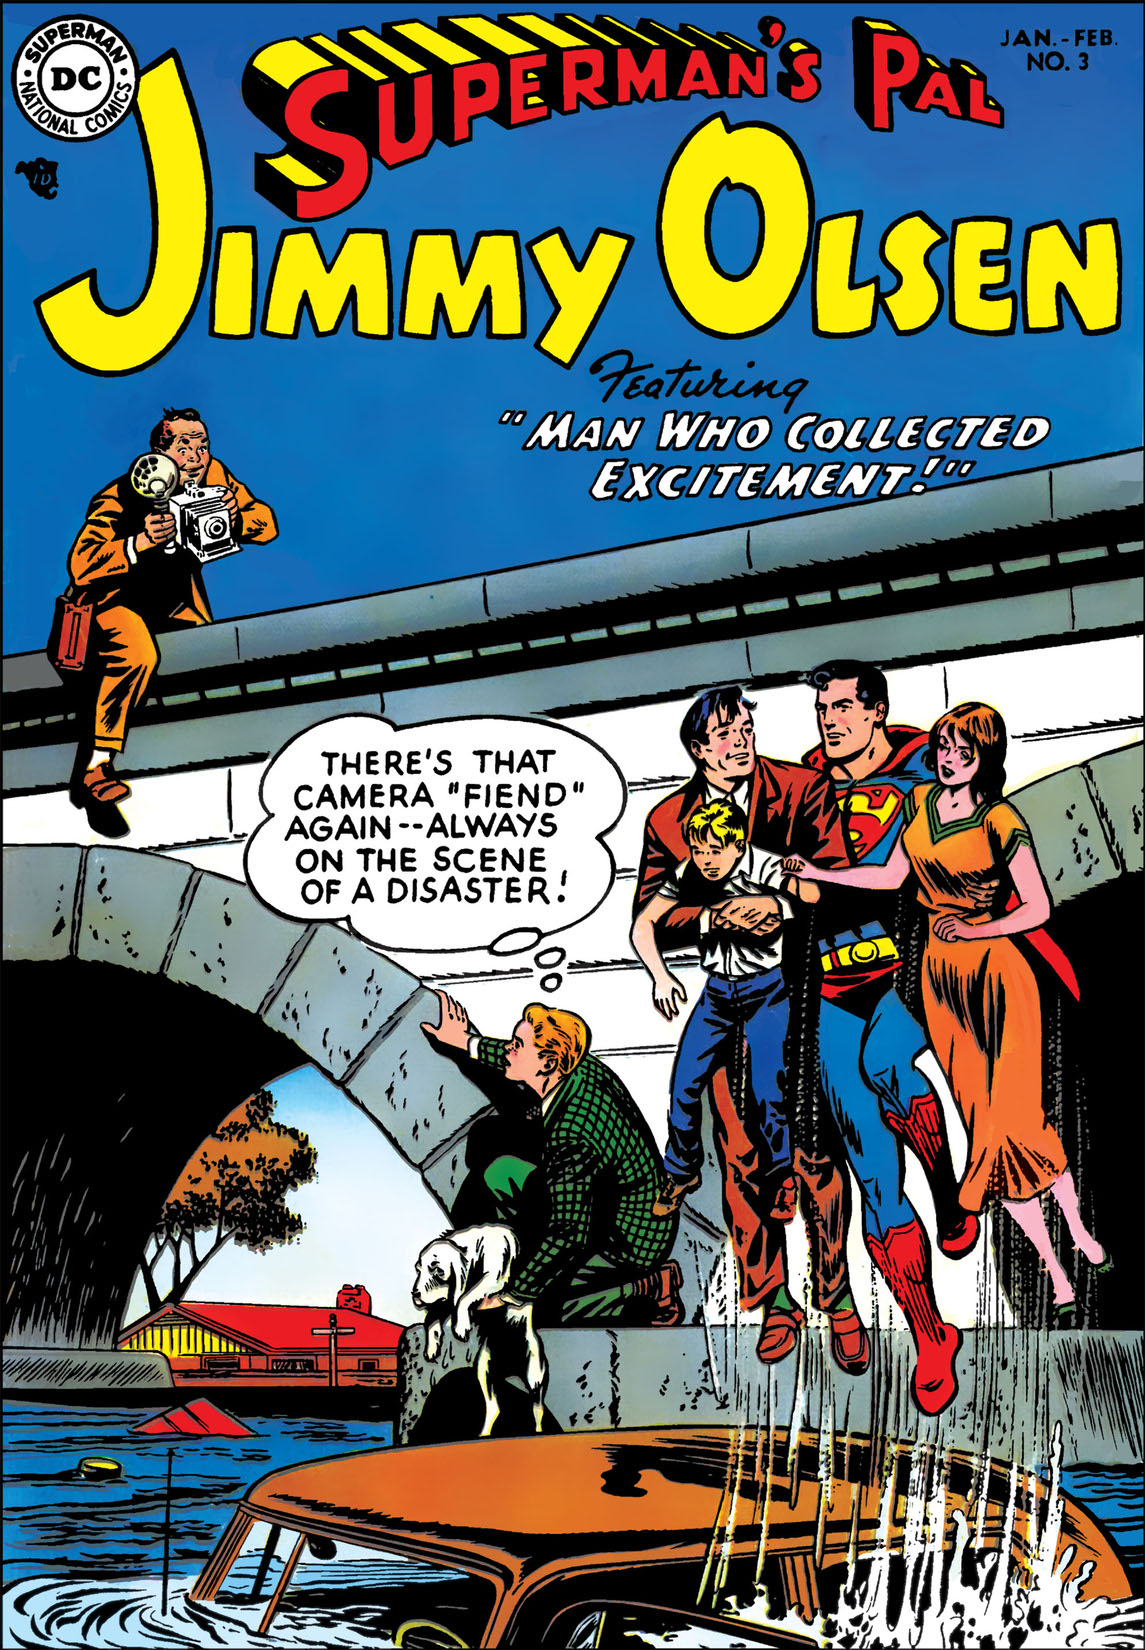 Superman's Pal, Jimmy Olsen #3 preview images